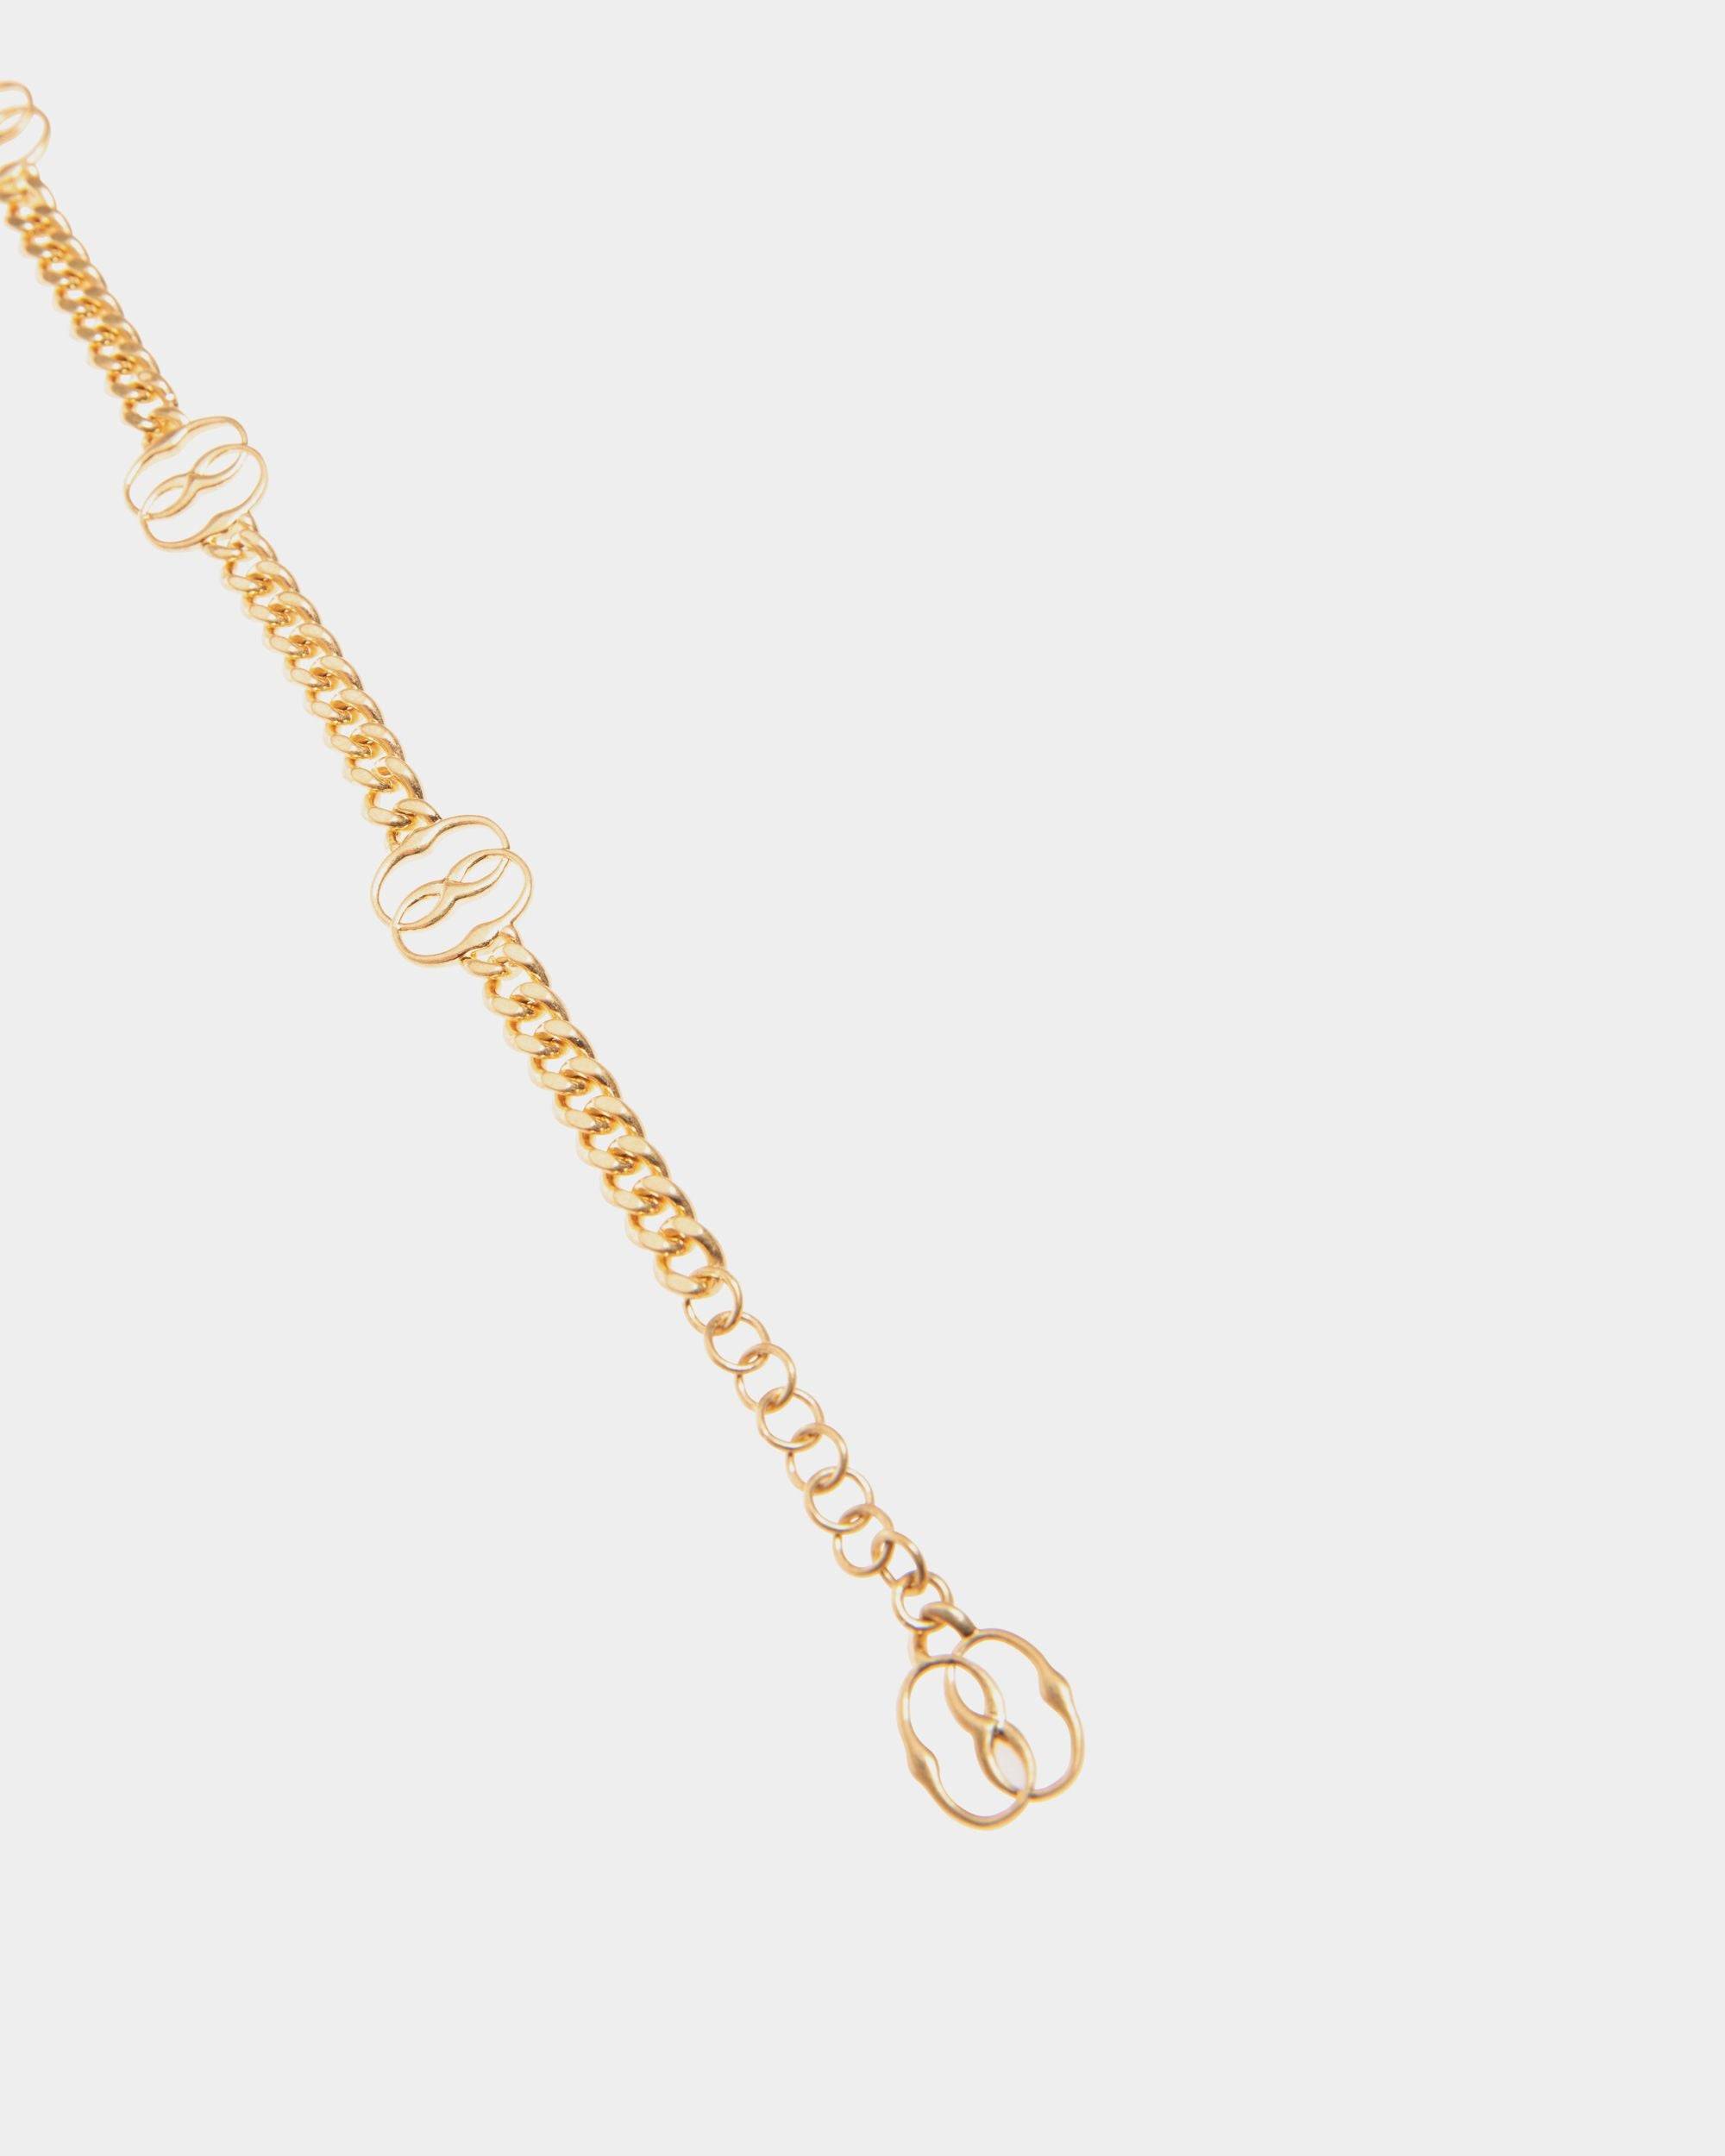 Emblem | Women's Bracelet in Gold Eco Brass | Bally | Still Life Detail